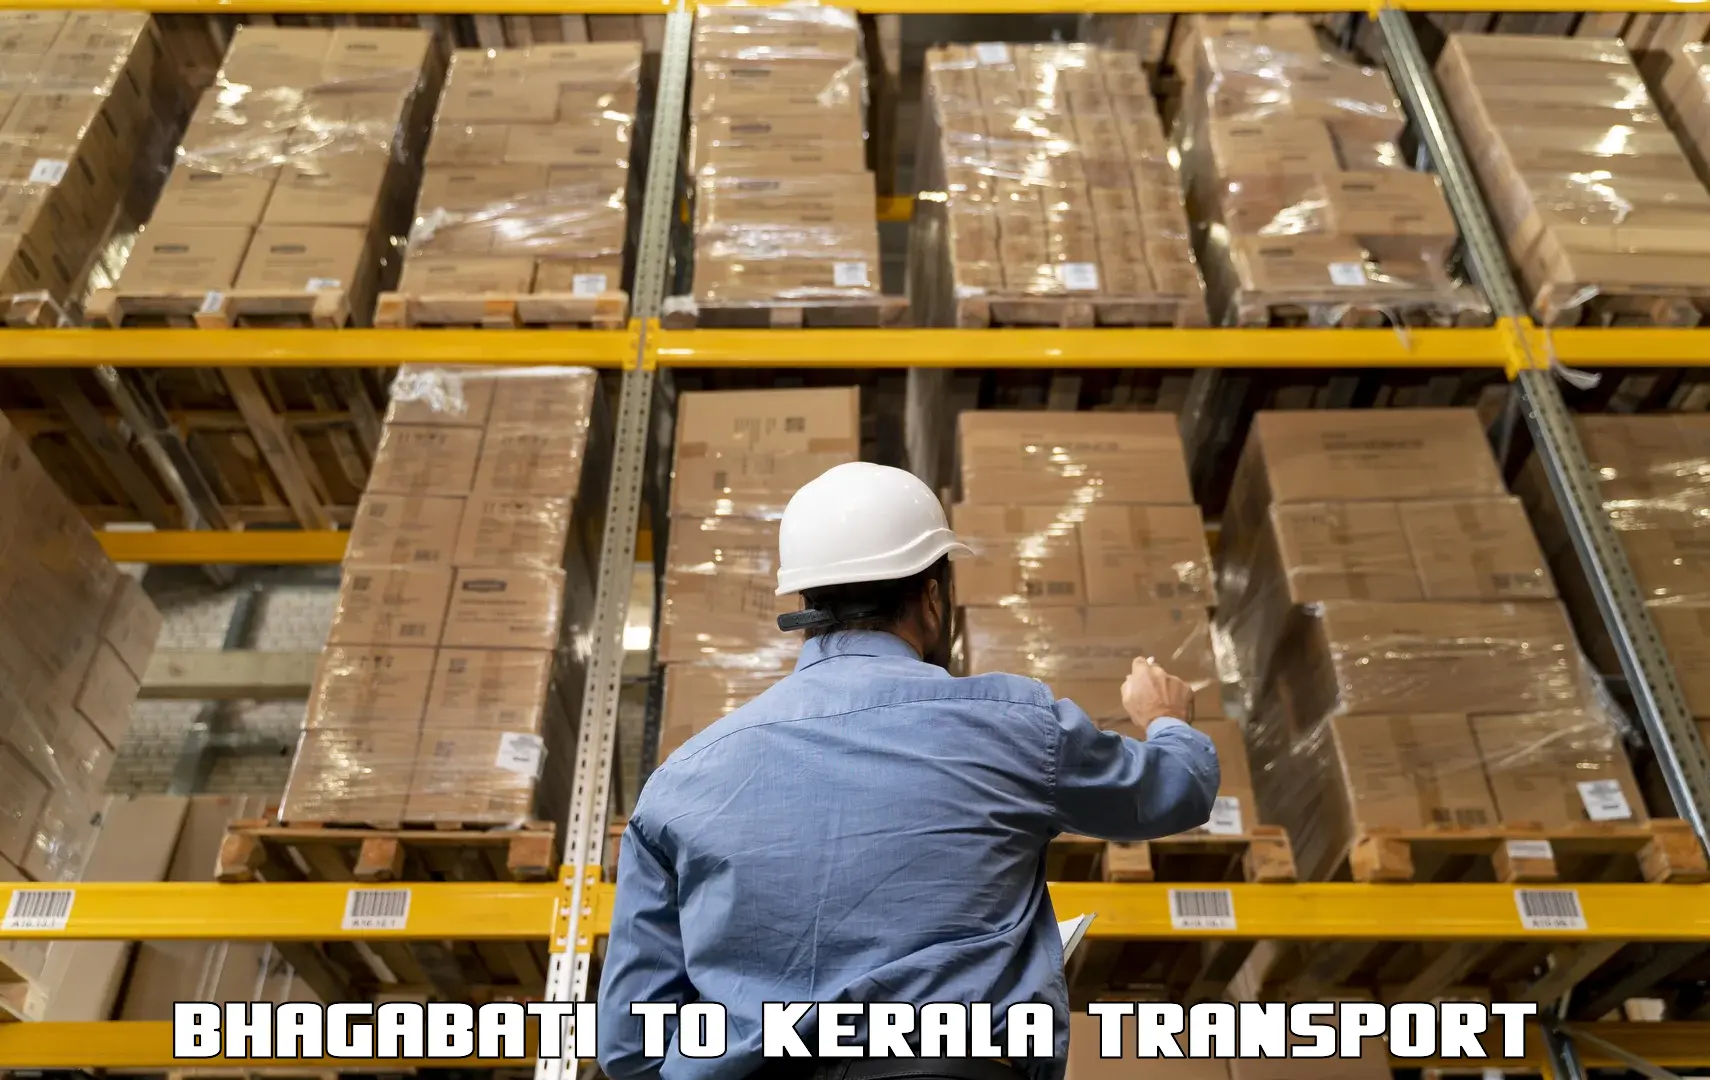 Transport shared services Bhagabati to Kerala